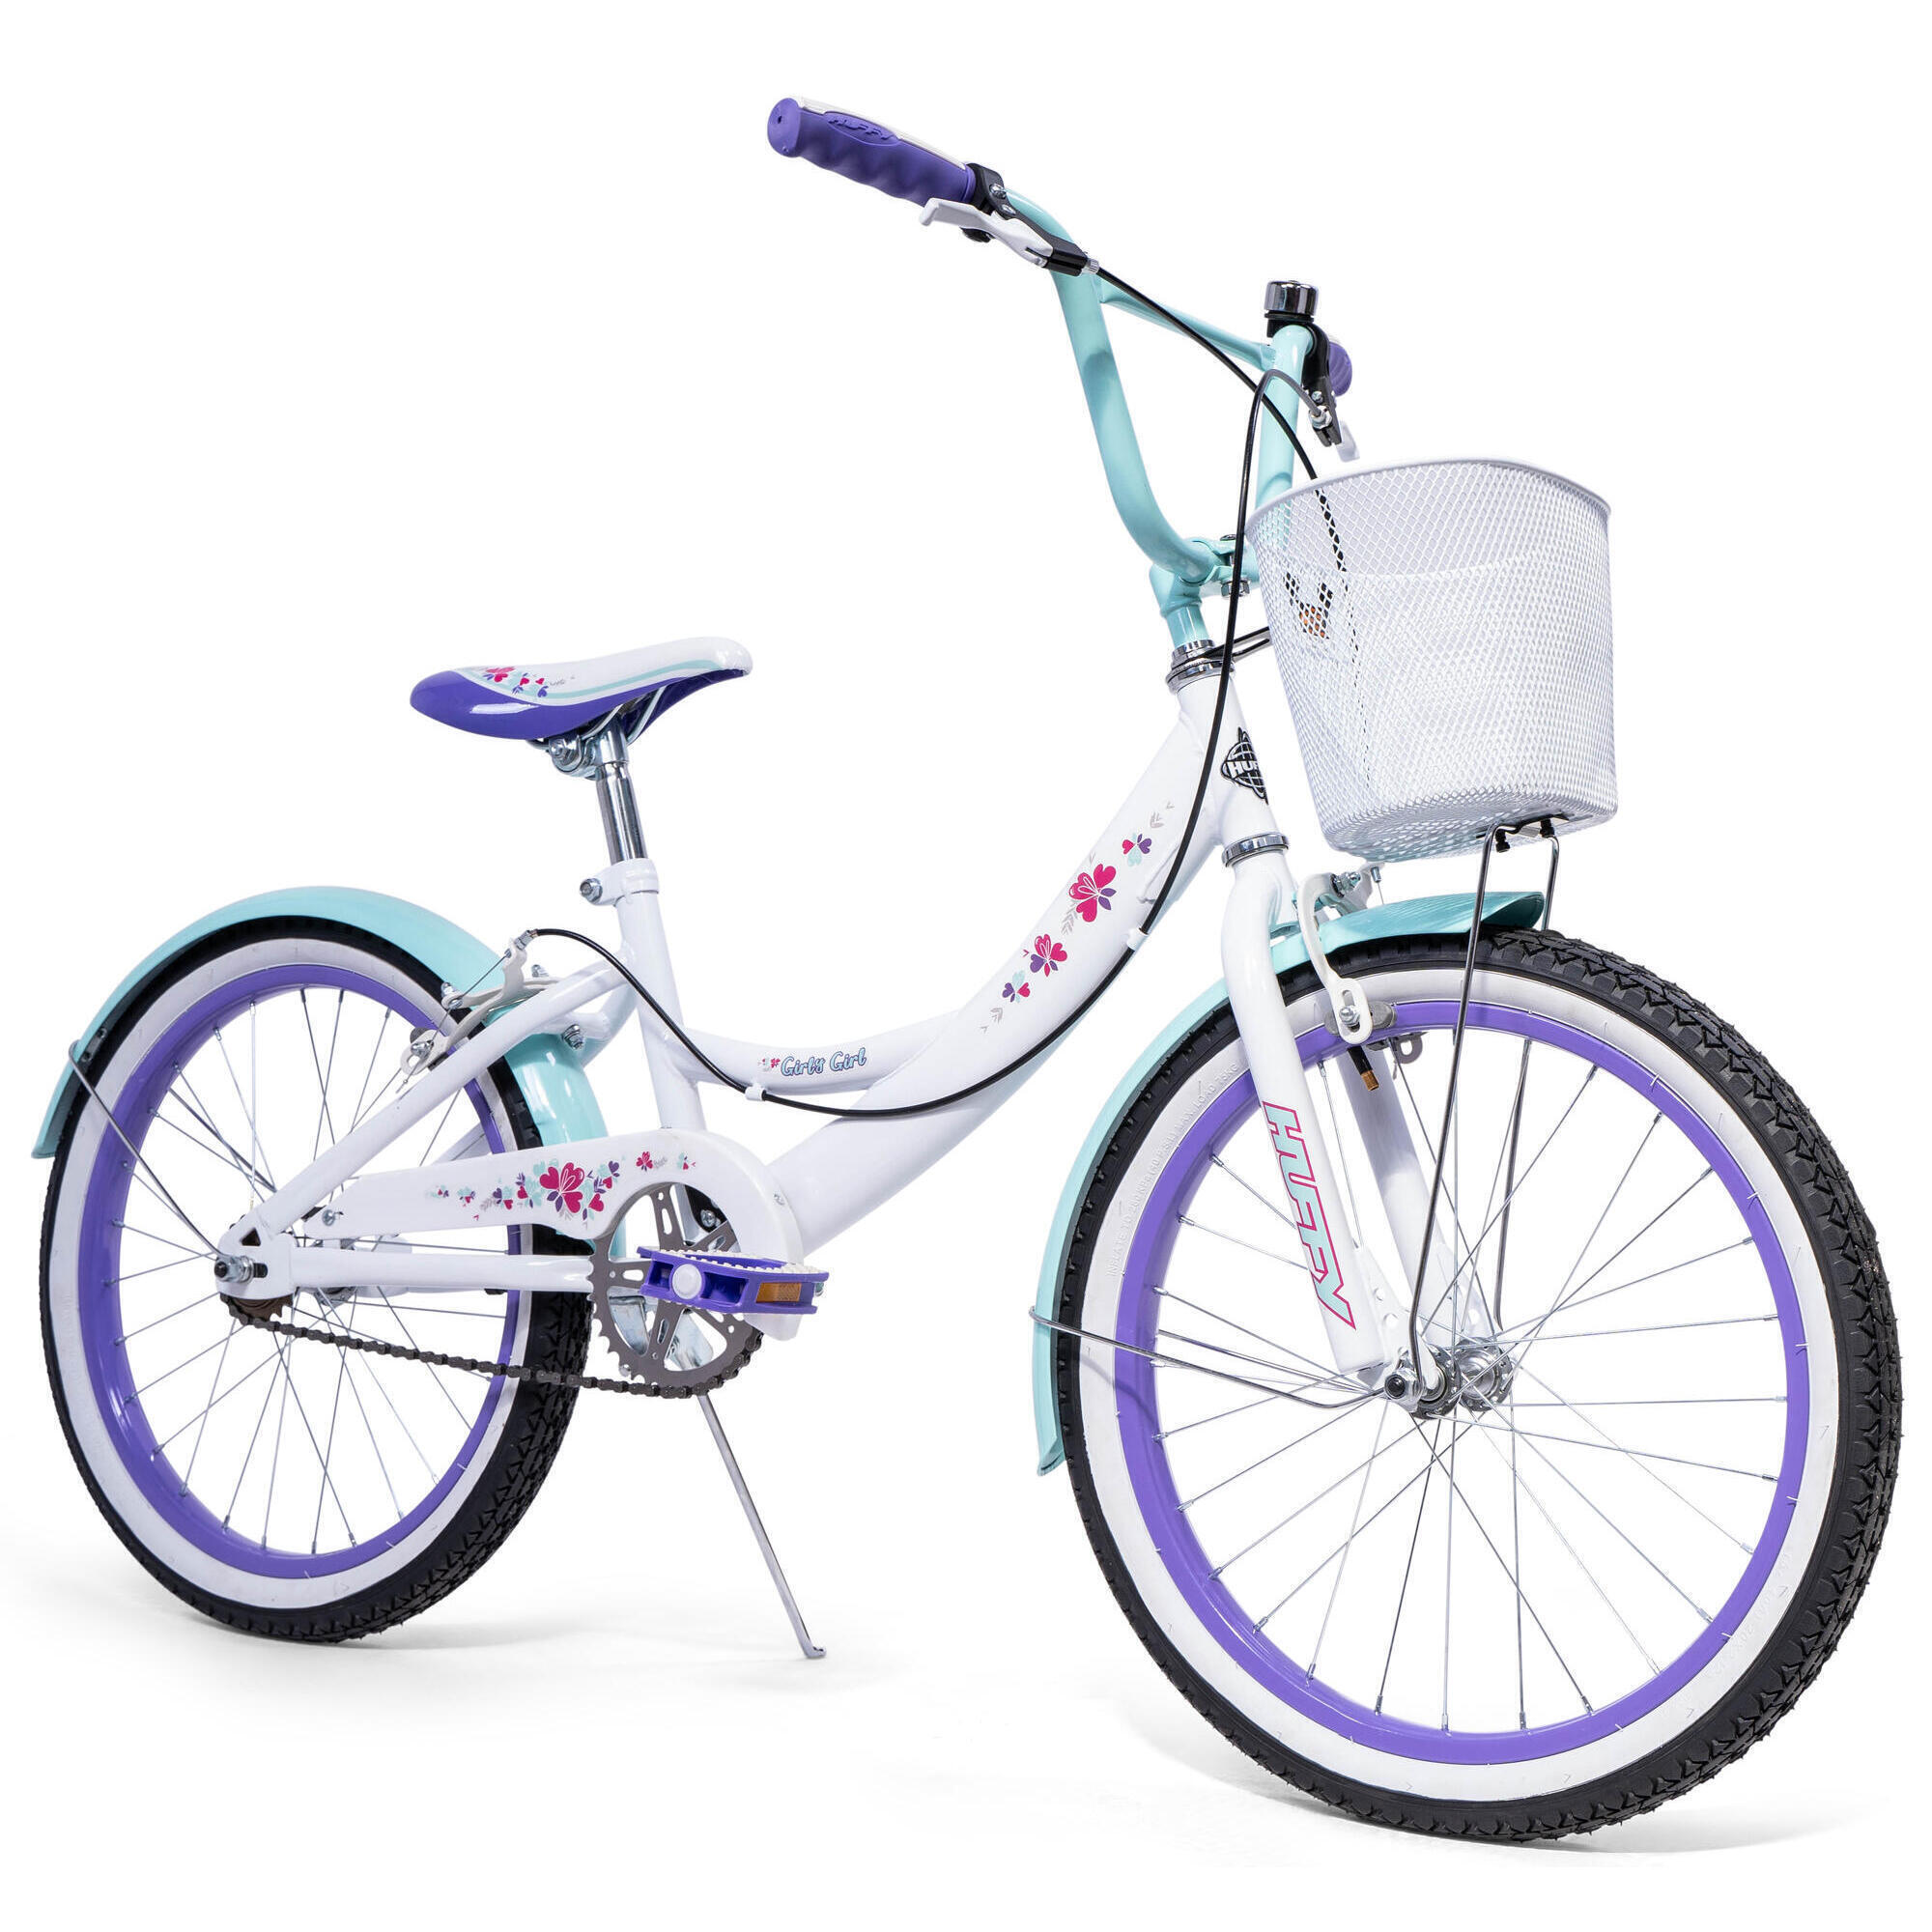 Huffy Girly Girl 20" Kids Bike - White + Purple for Girls aged 6 - 9yrs 1/5